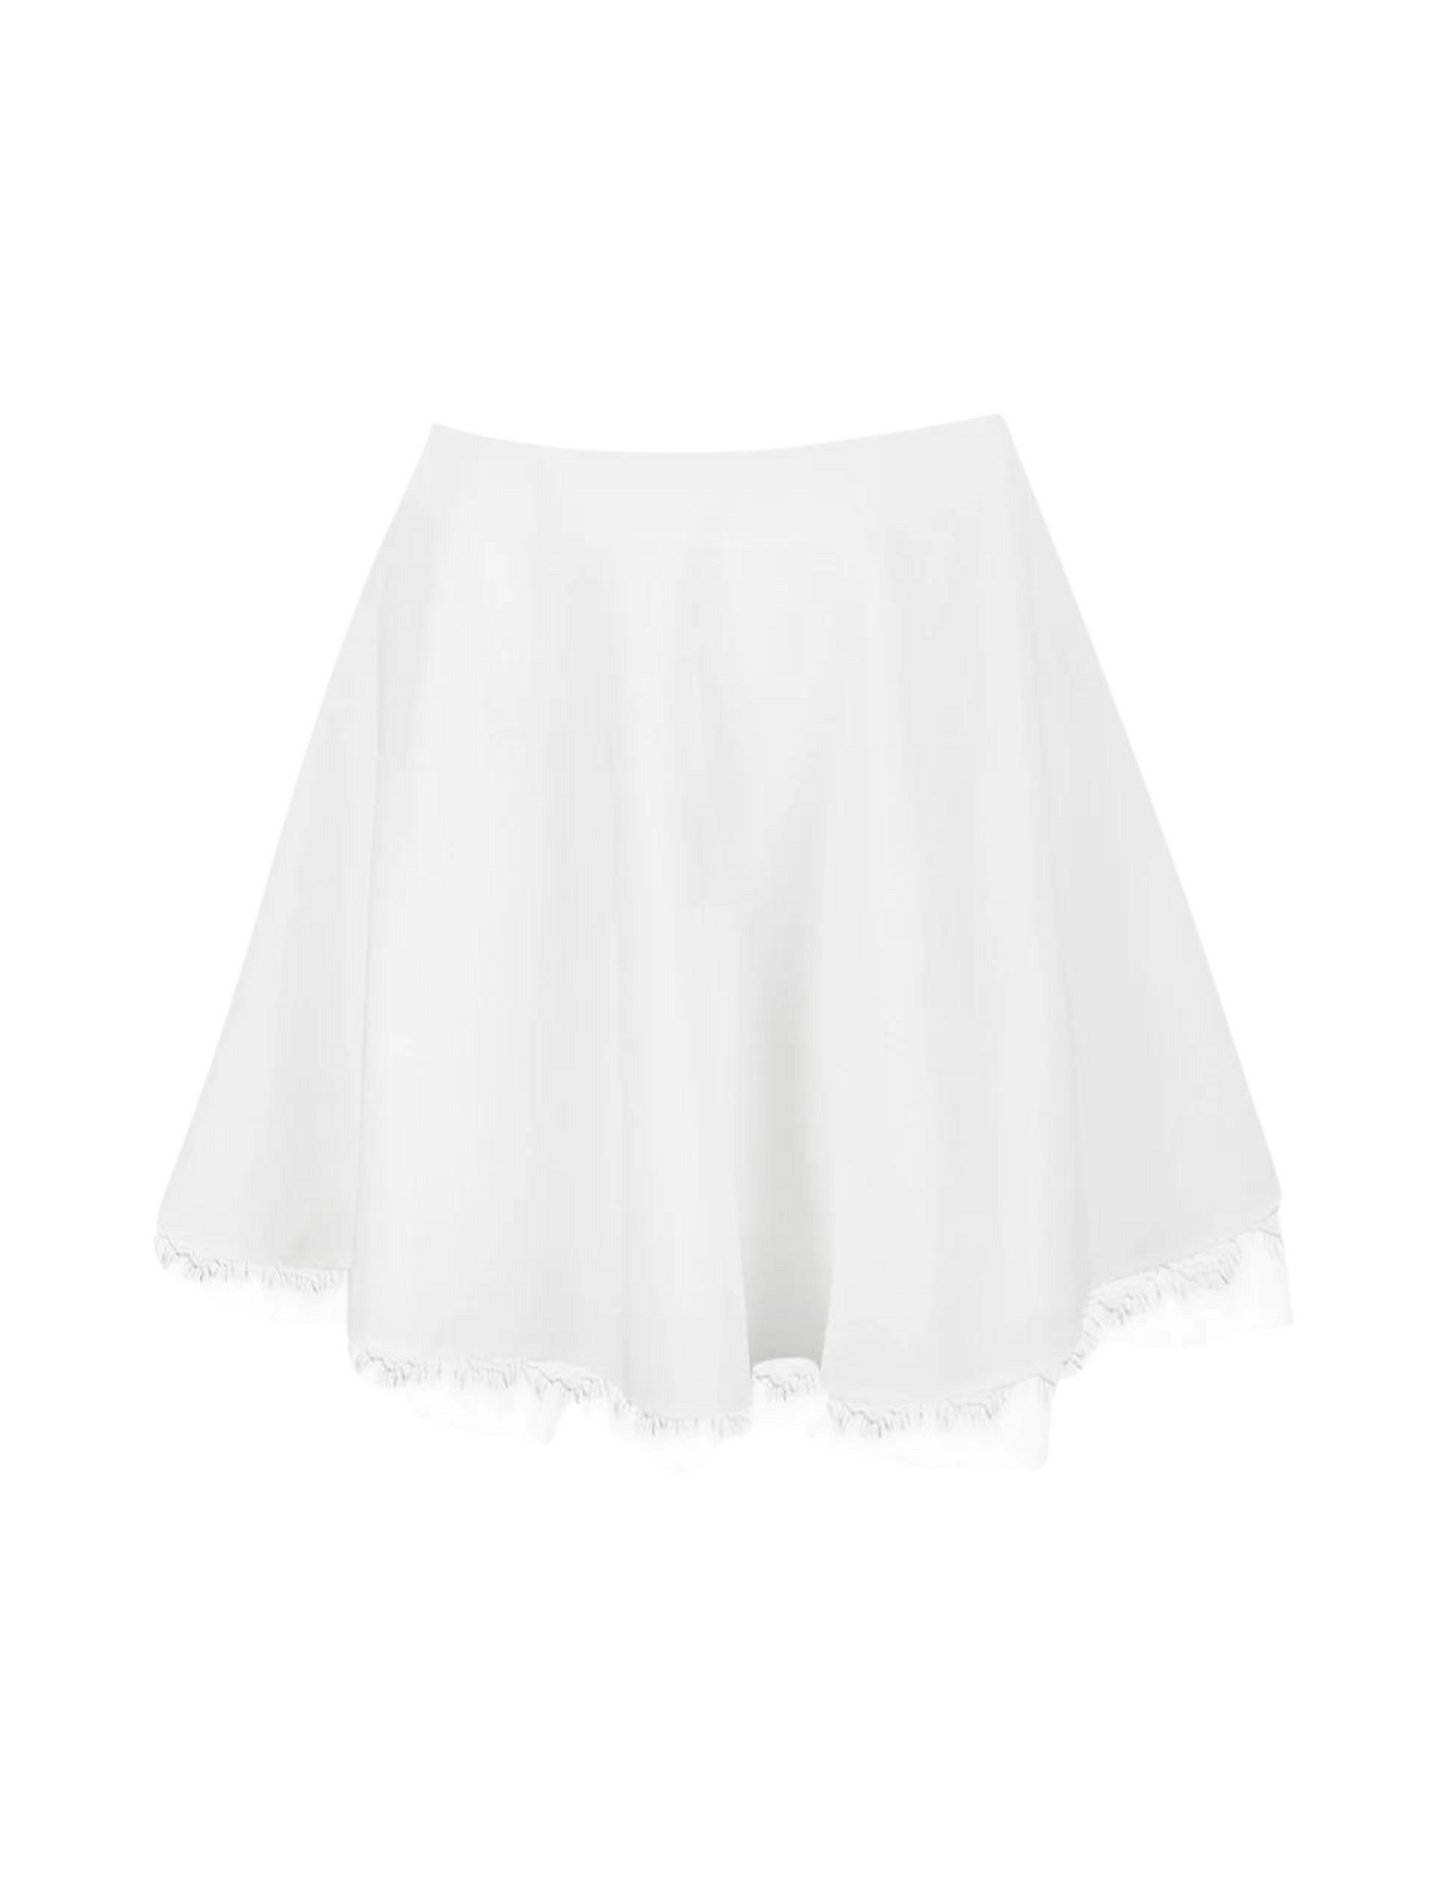 Pearlescent // Skirt